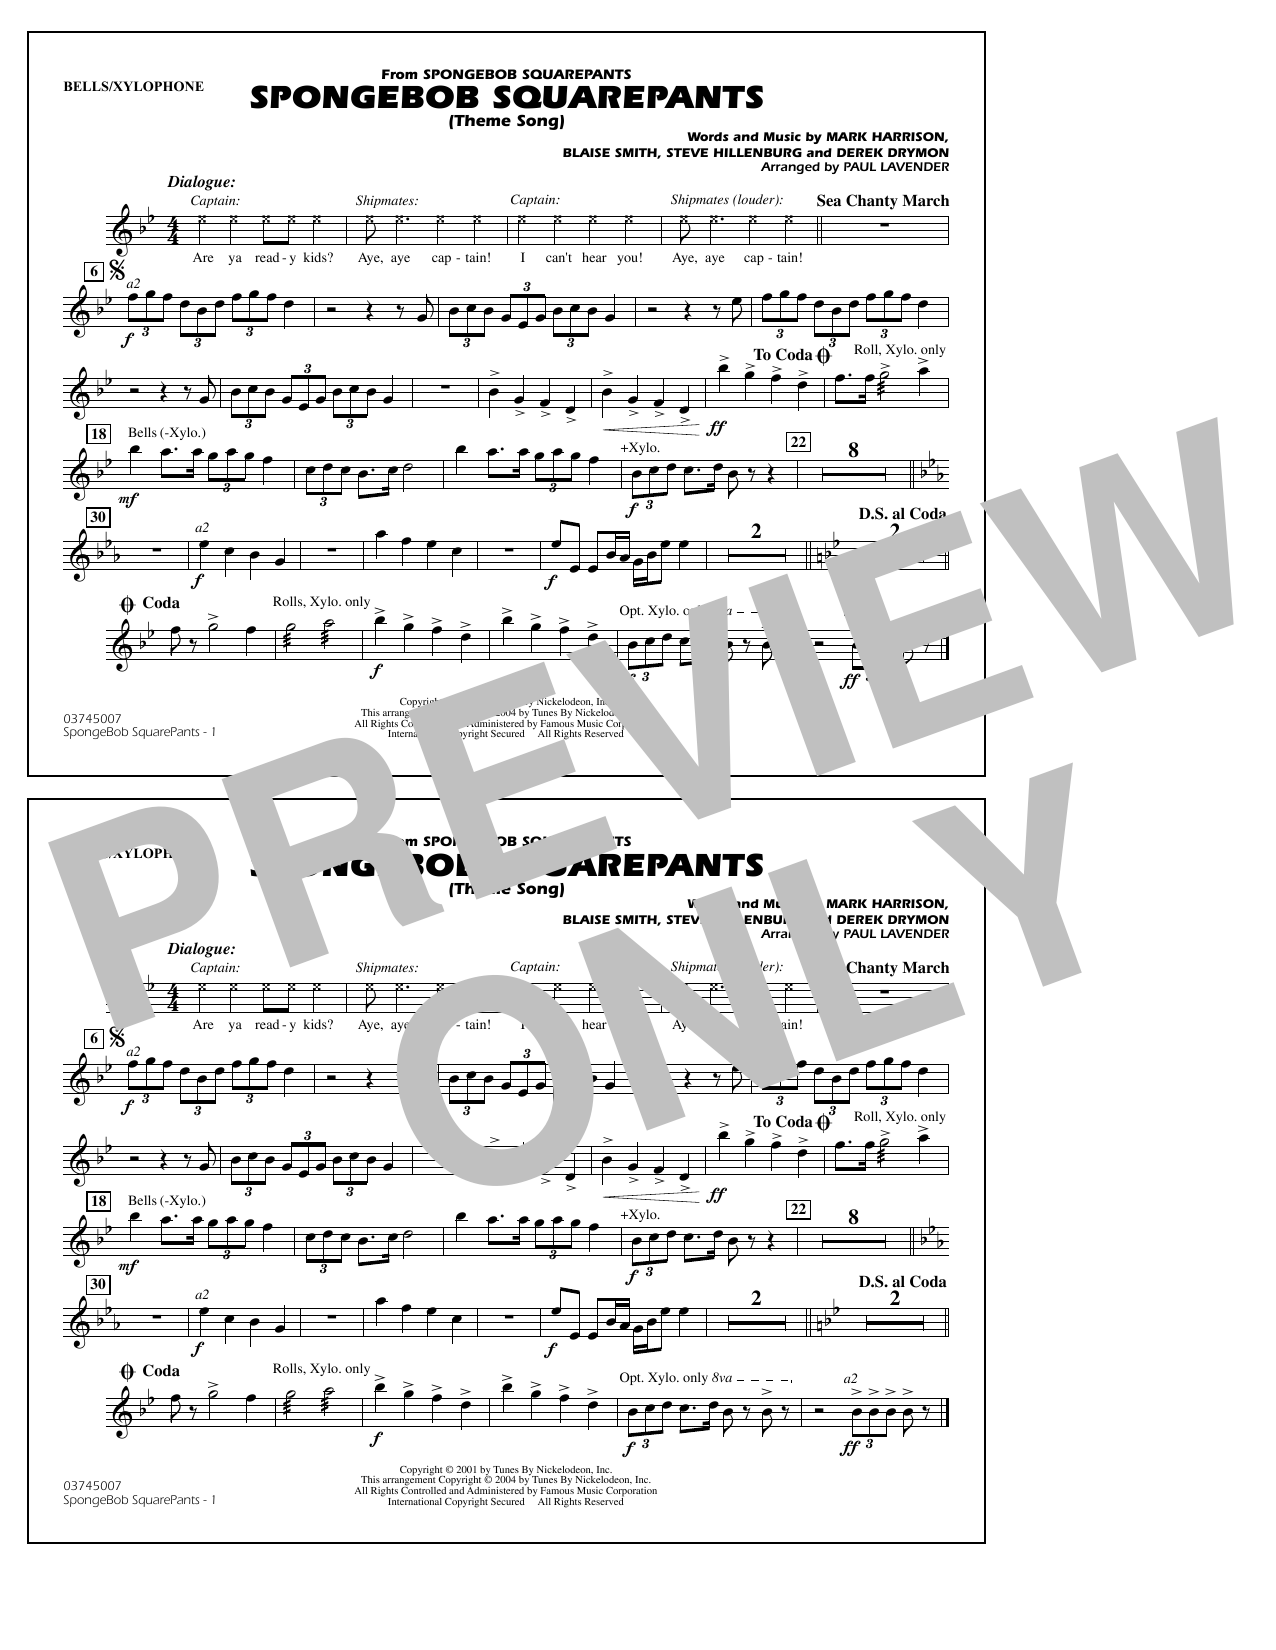 Steve Hillenburg Spongebob Squarepants (Theme Song) (arr. Paul Lavender) - Bells/Xylophone Sheet Music Notes & Chords for Marching Band - Download or Print PDF